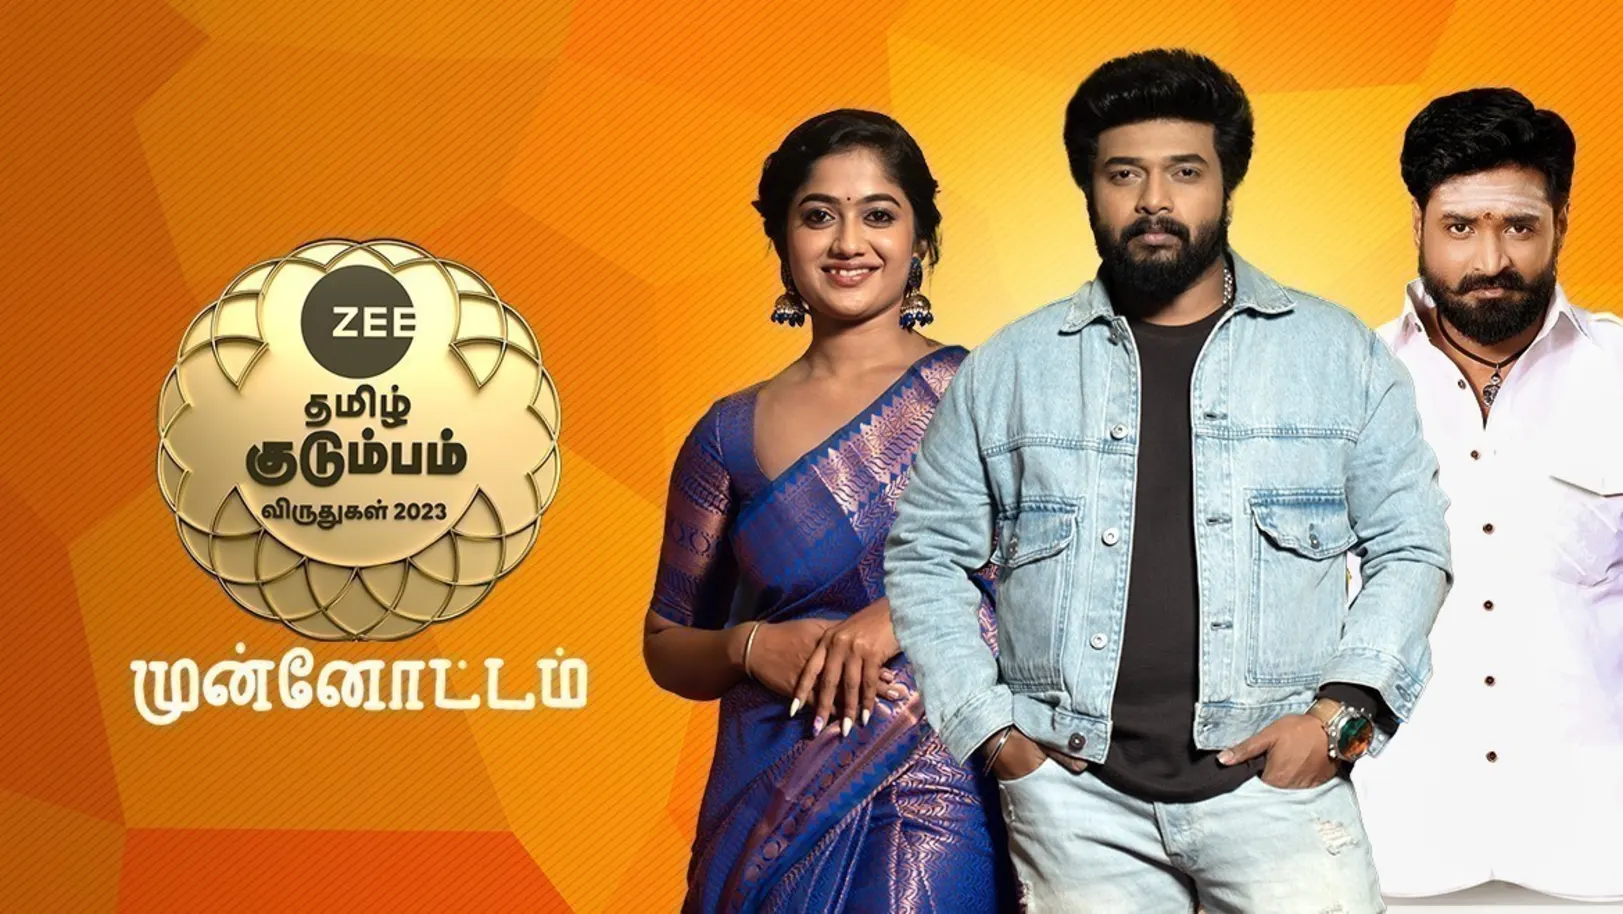 ZEE Tamil Kudumba Viruthugal 2023 TV Show